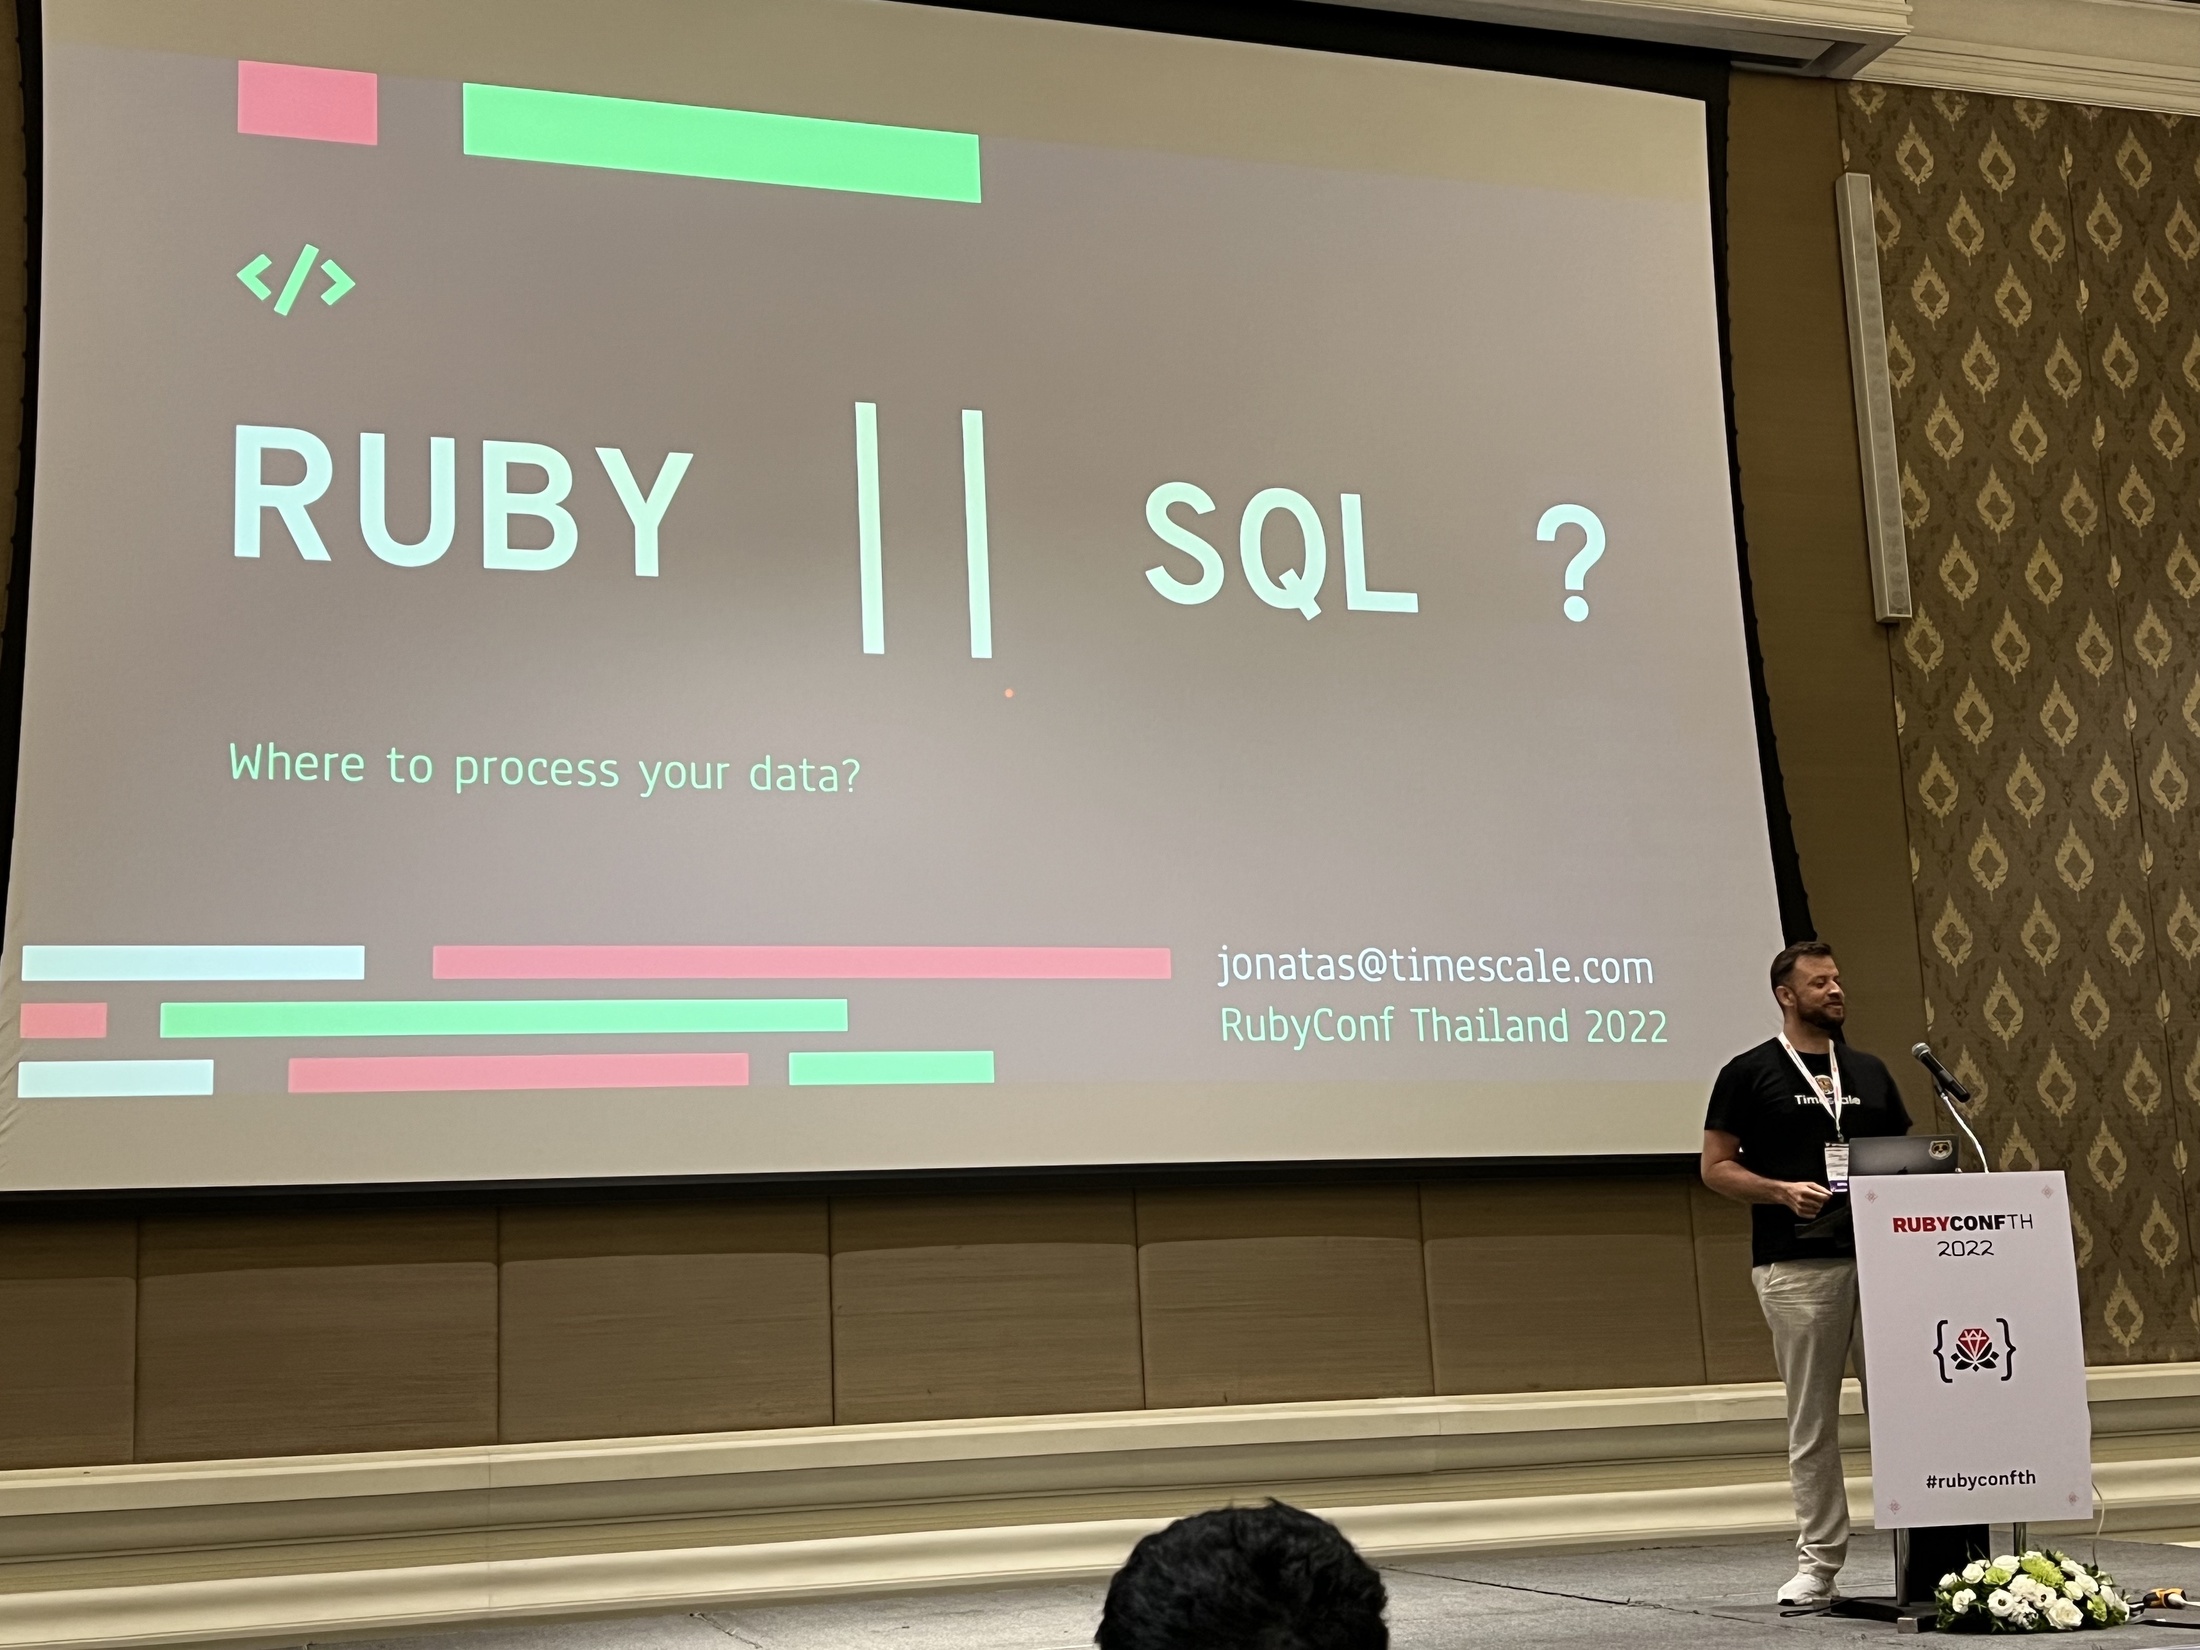 1 ruby or SQL